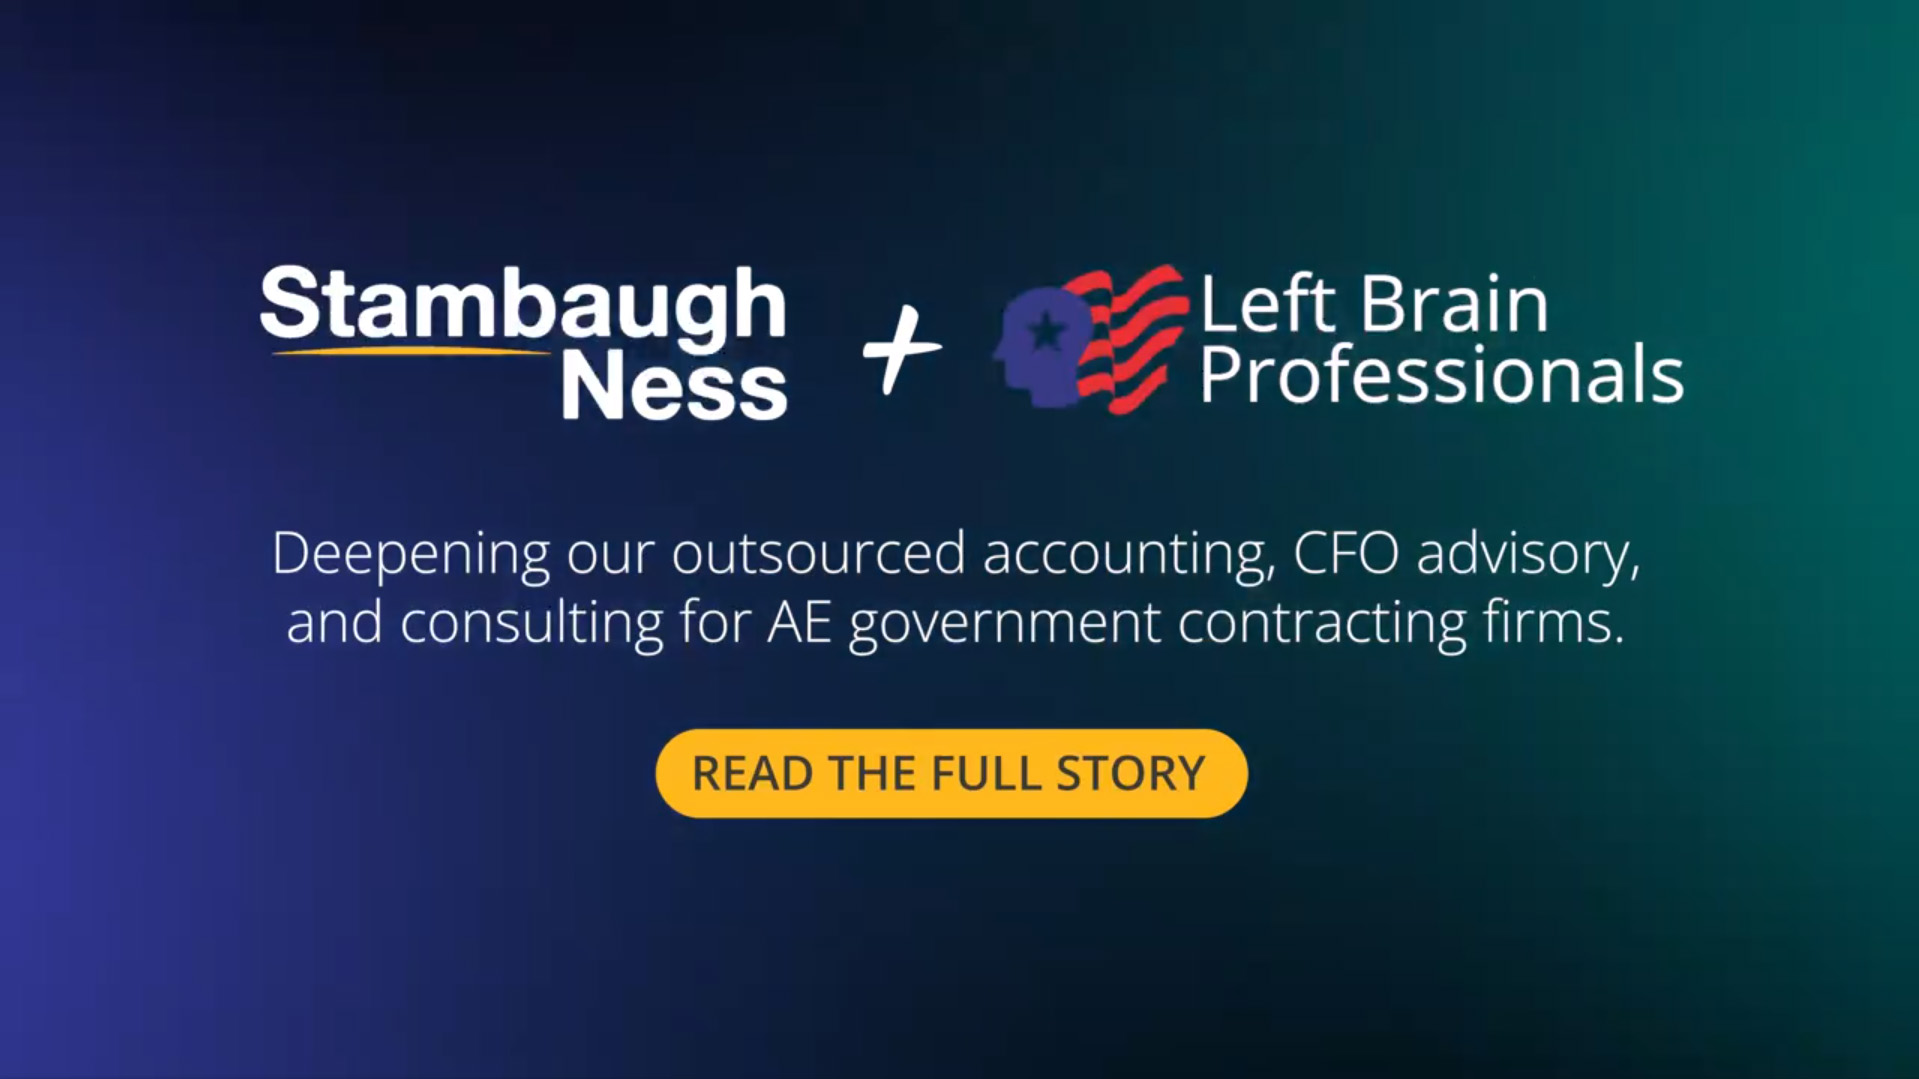 Left Brain Professionals Joins Stambaugh Ness